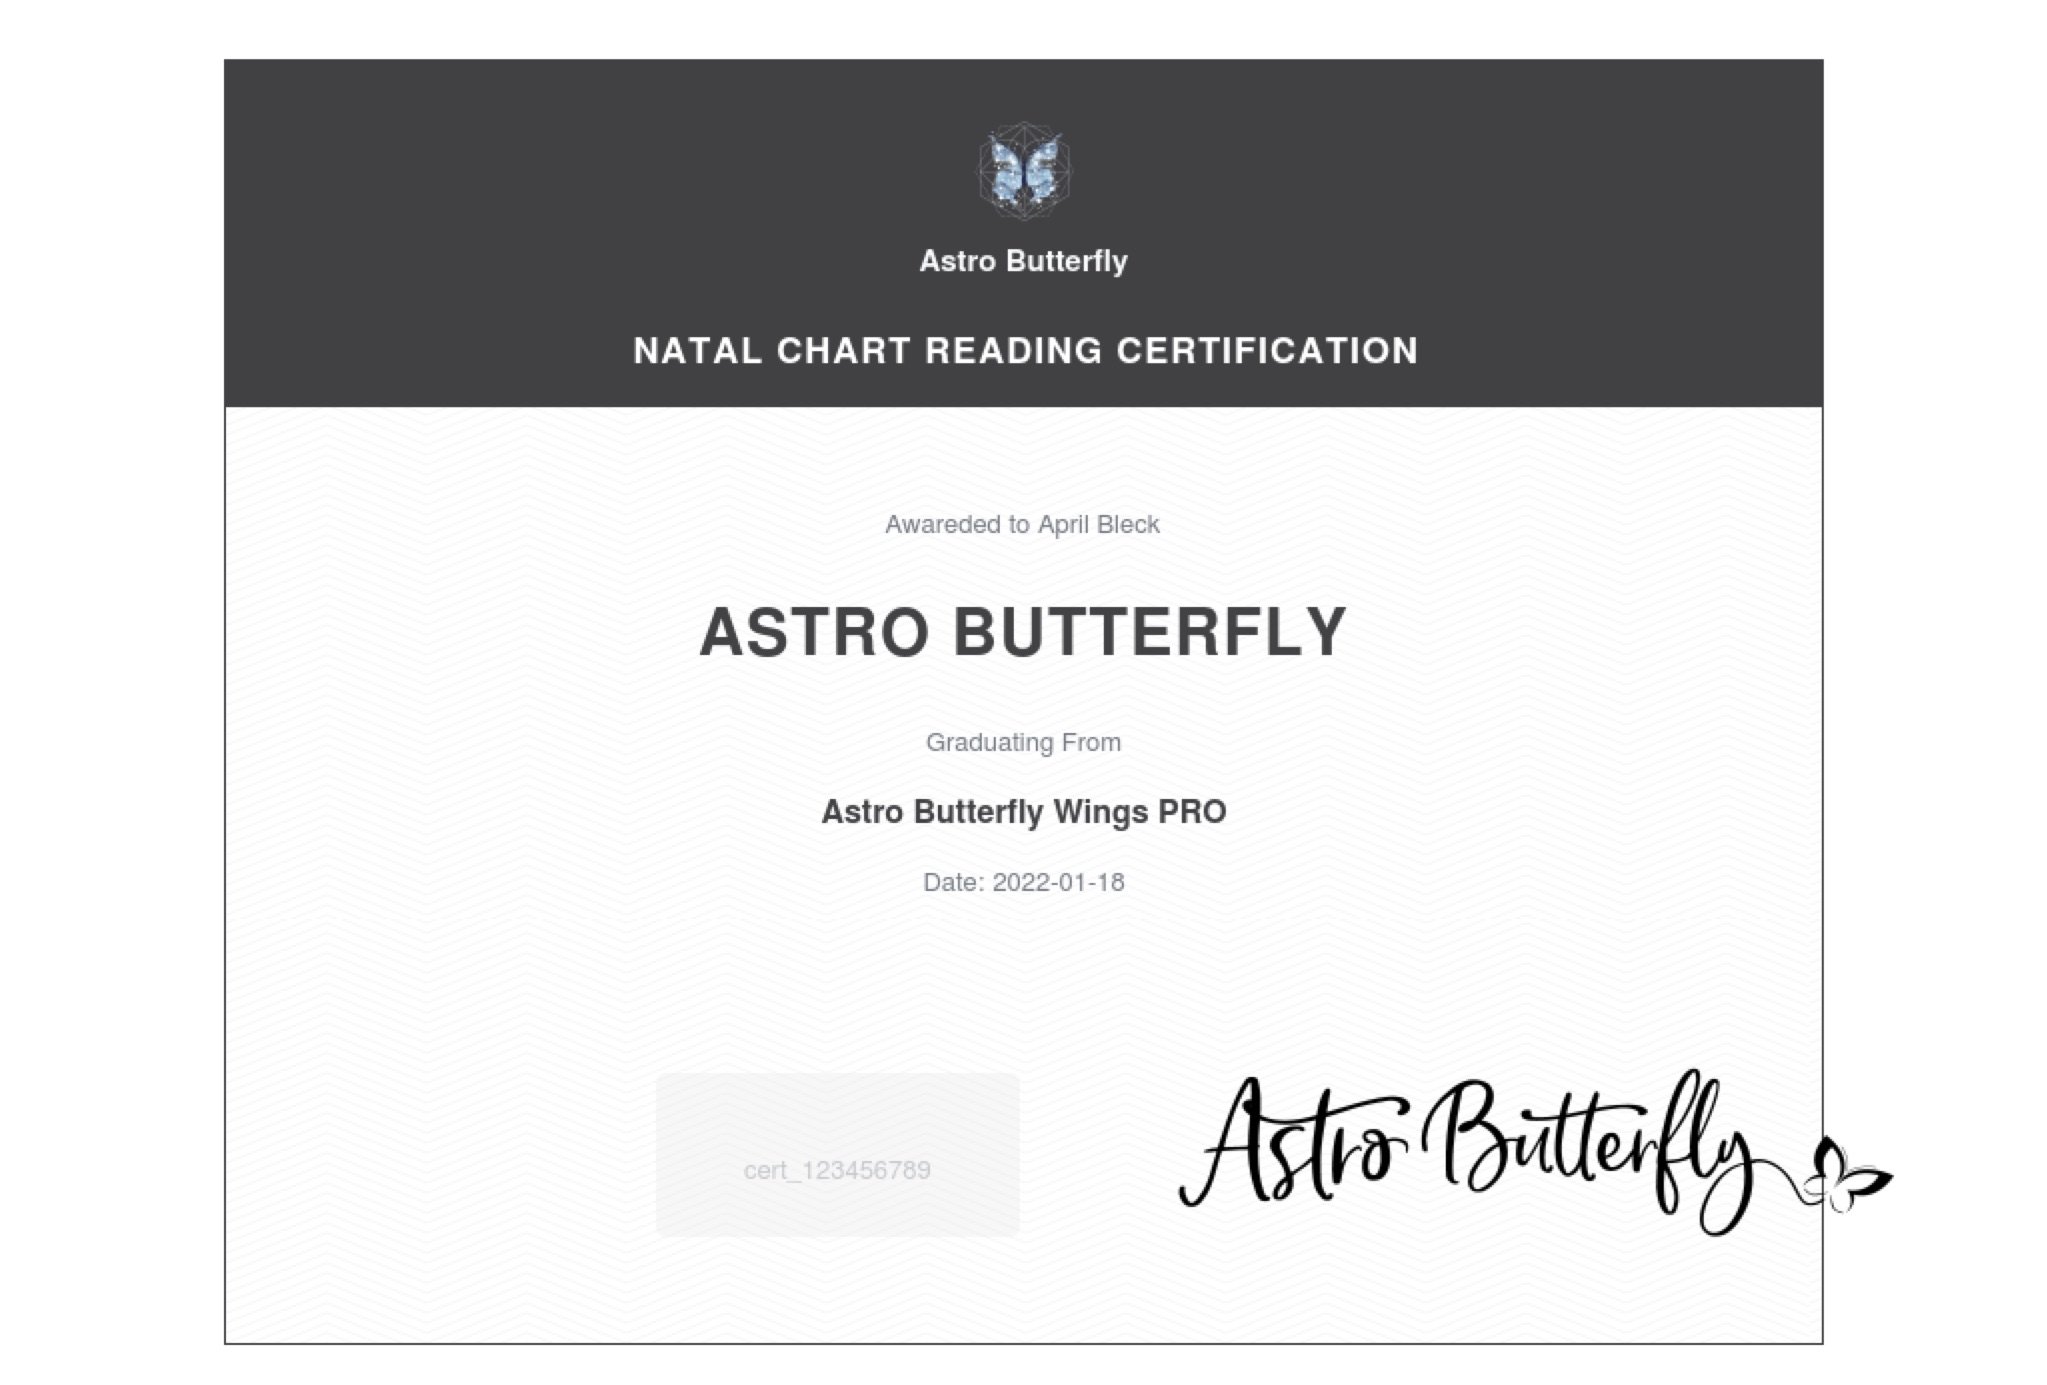 certification-astro-butterfly-wings-pro-april-bleck.jpg